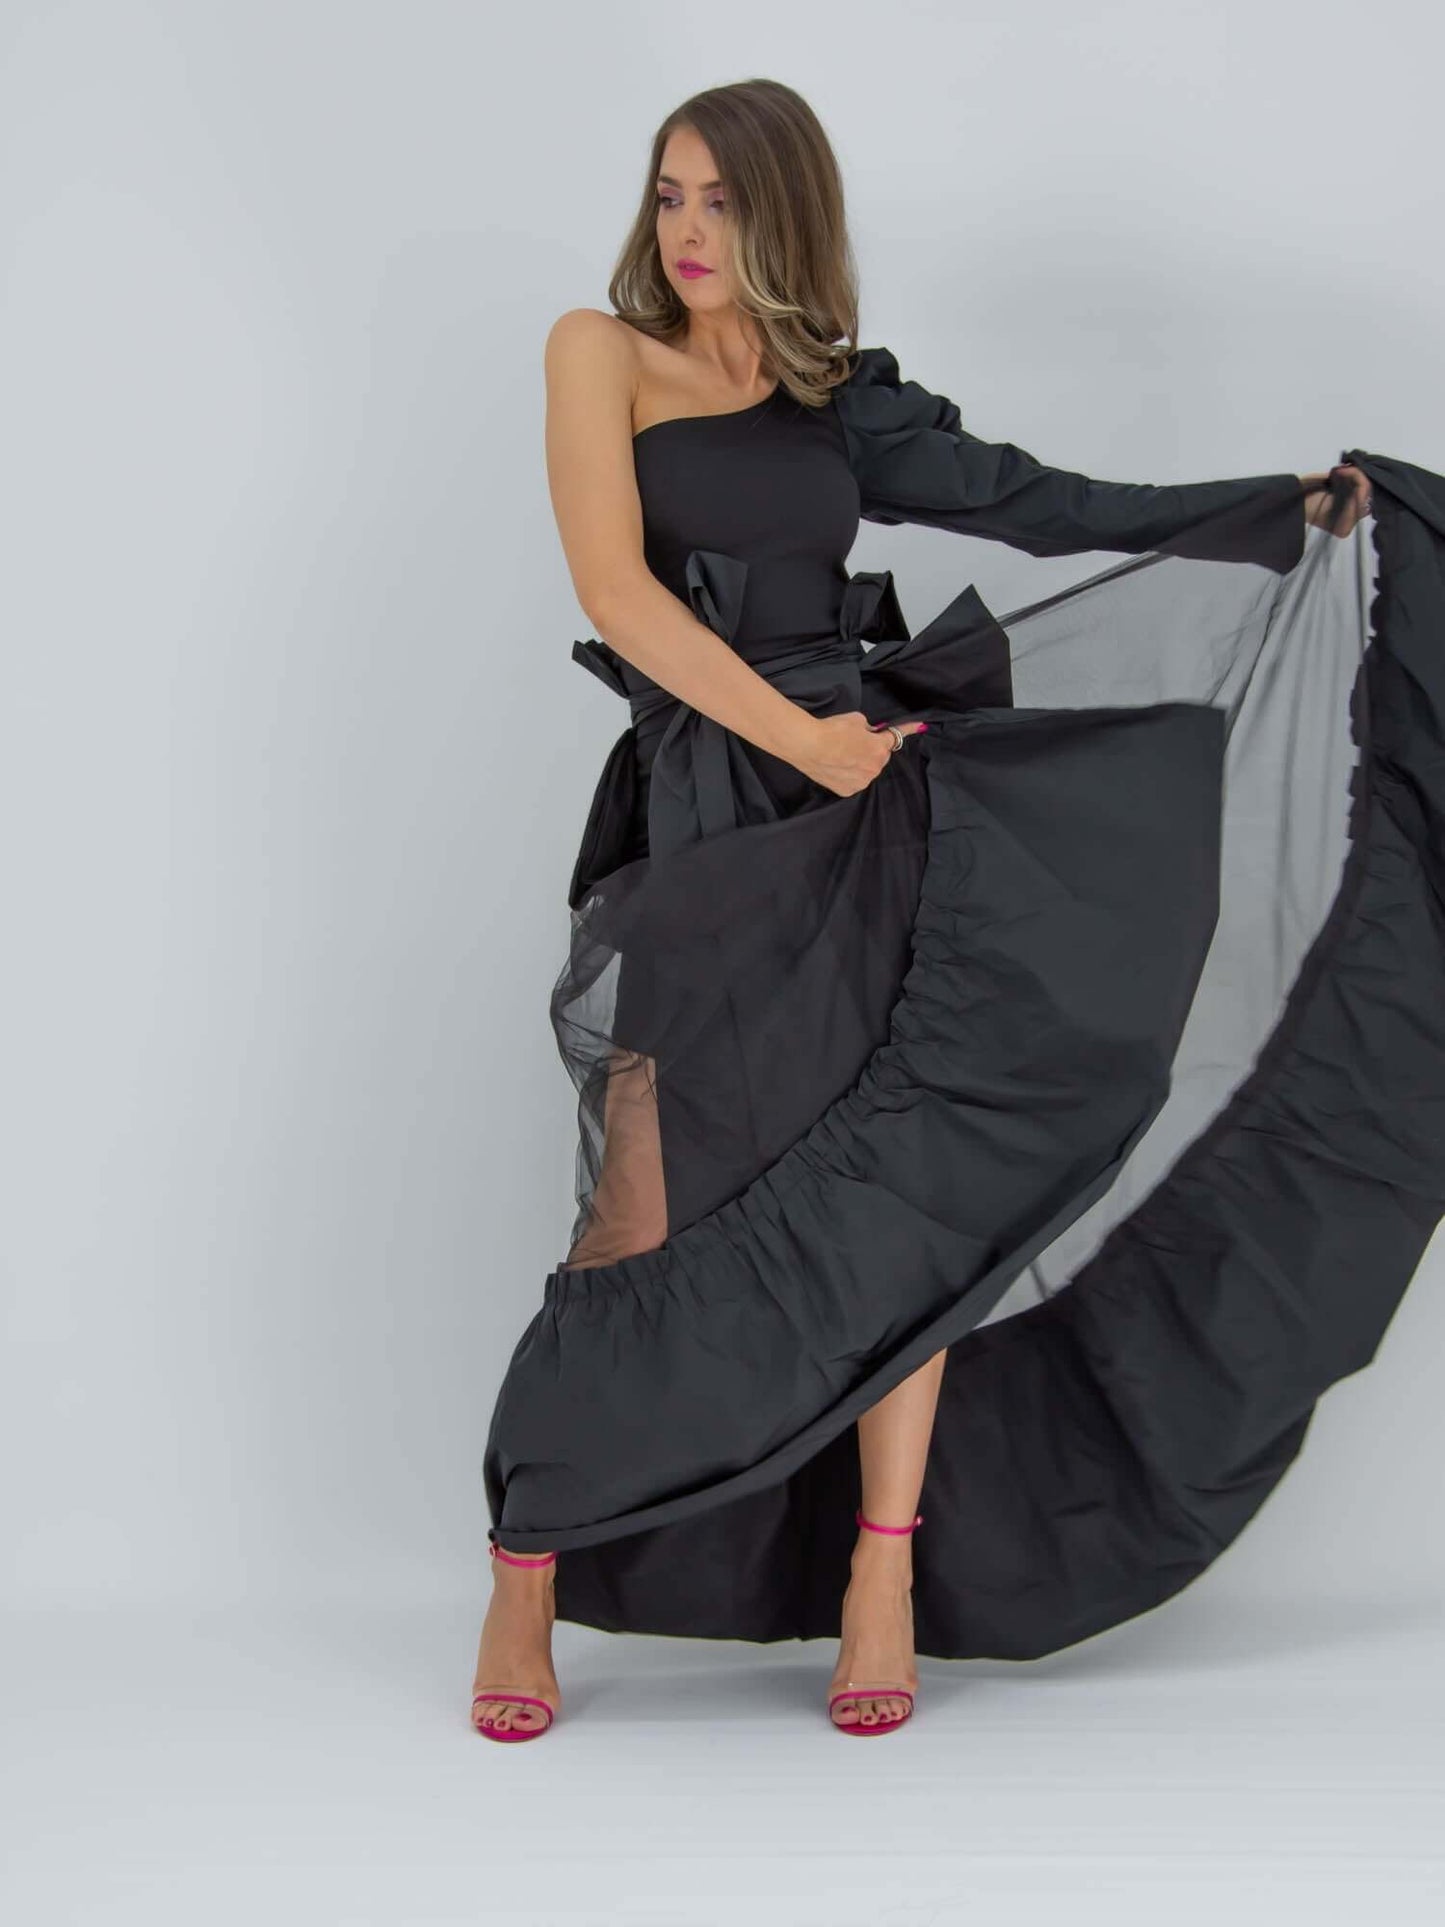 '80s Fairytale Floor-Length Self-Tie Belt by Tia Dorraine Women's Luxury Fashion Designer Clothing Brand